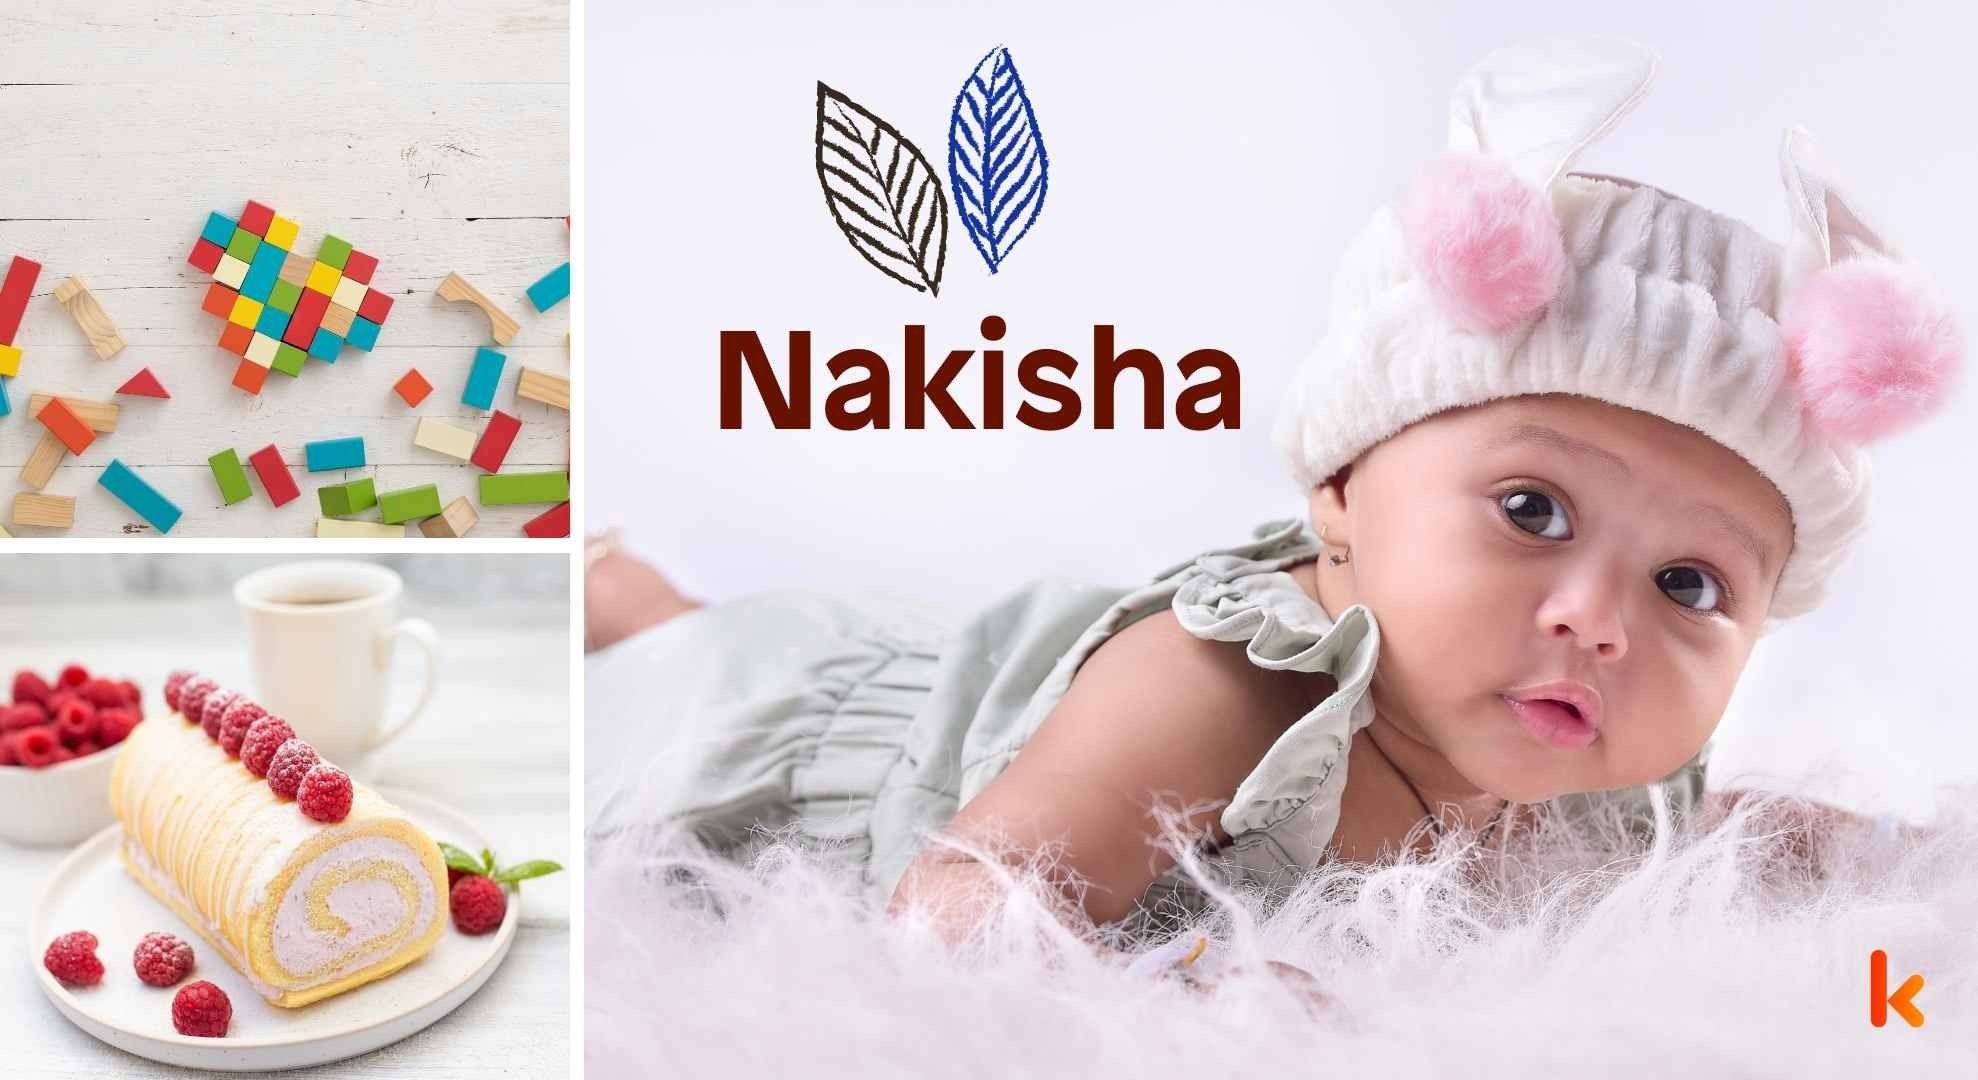 Meaning of the name Nakisha